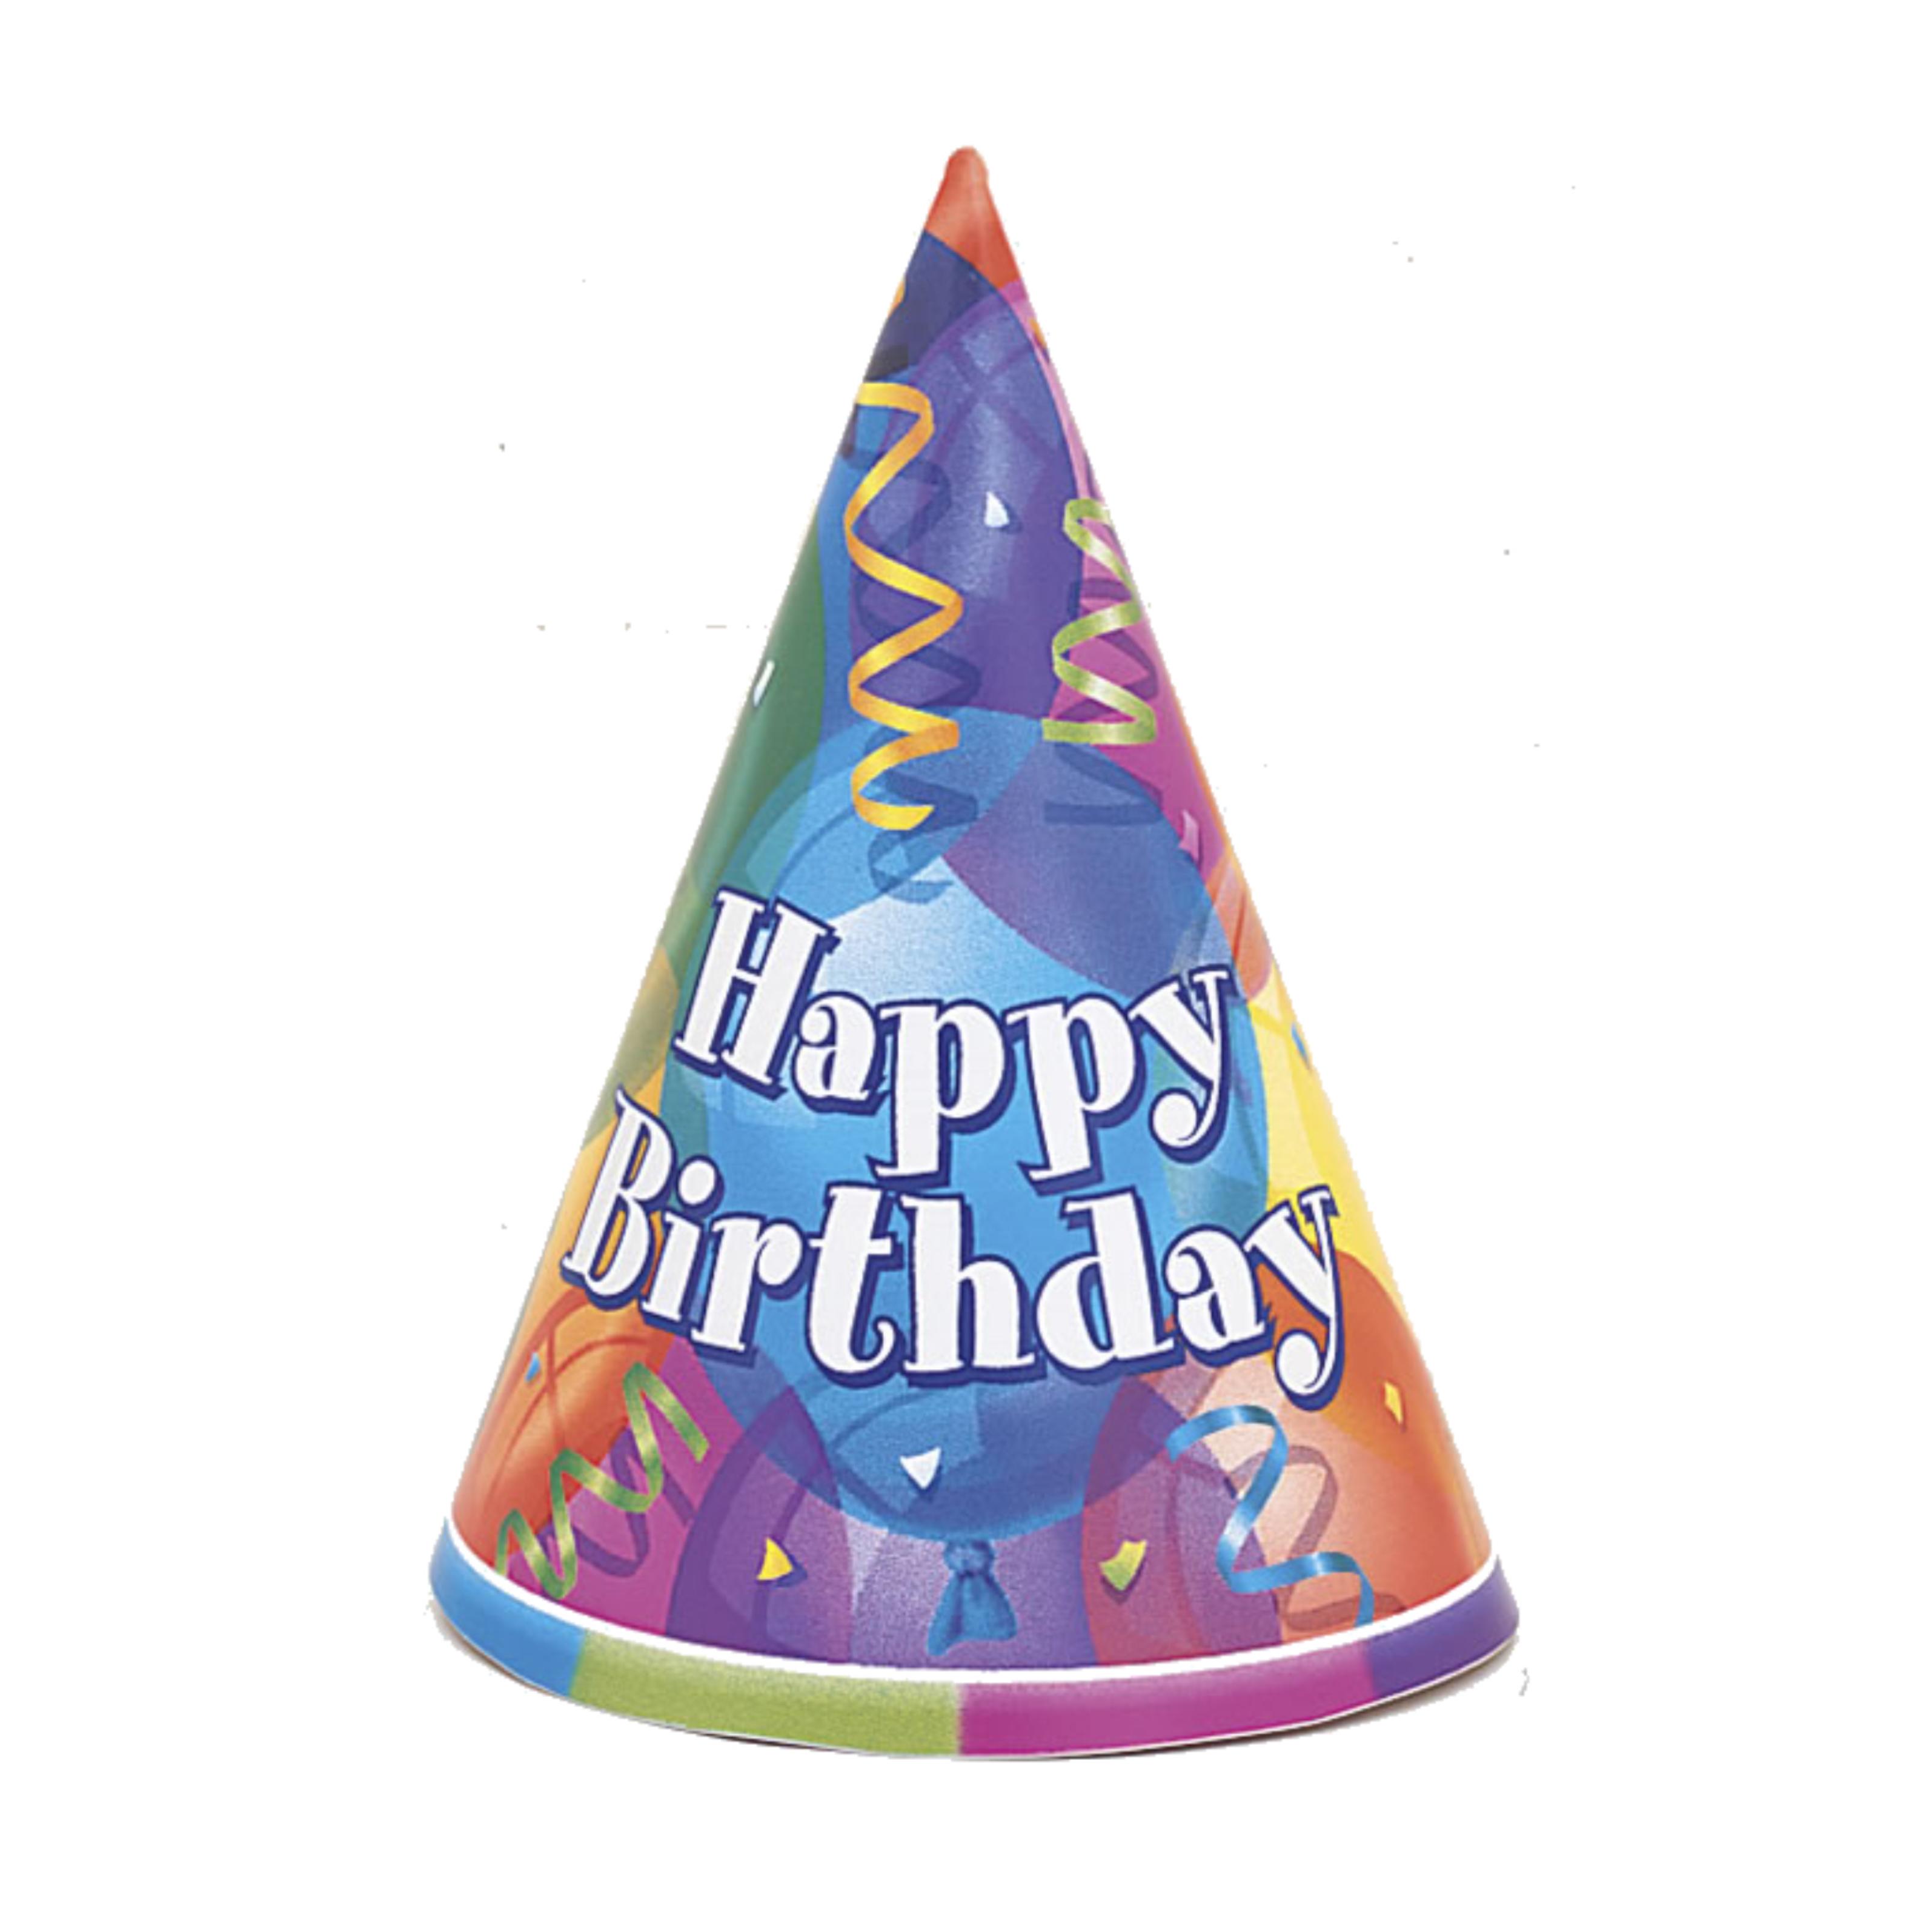 Happy birthday hat clipart 5 - WikiClipArt